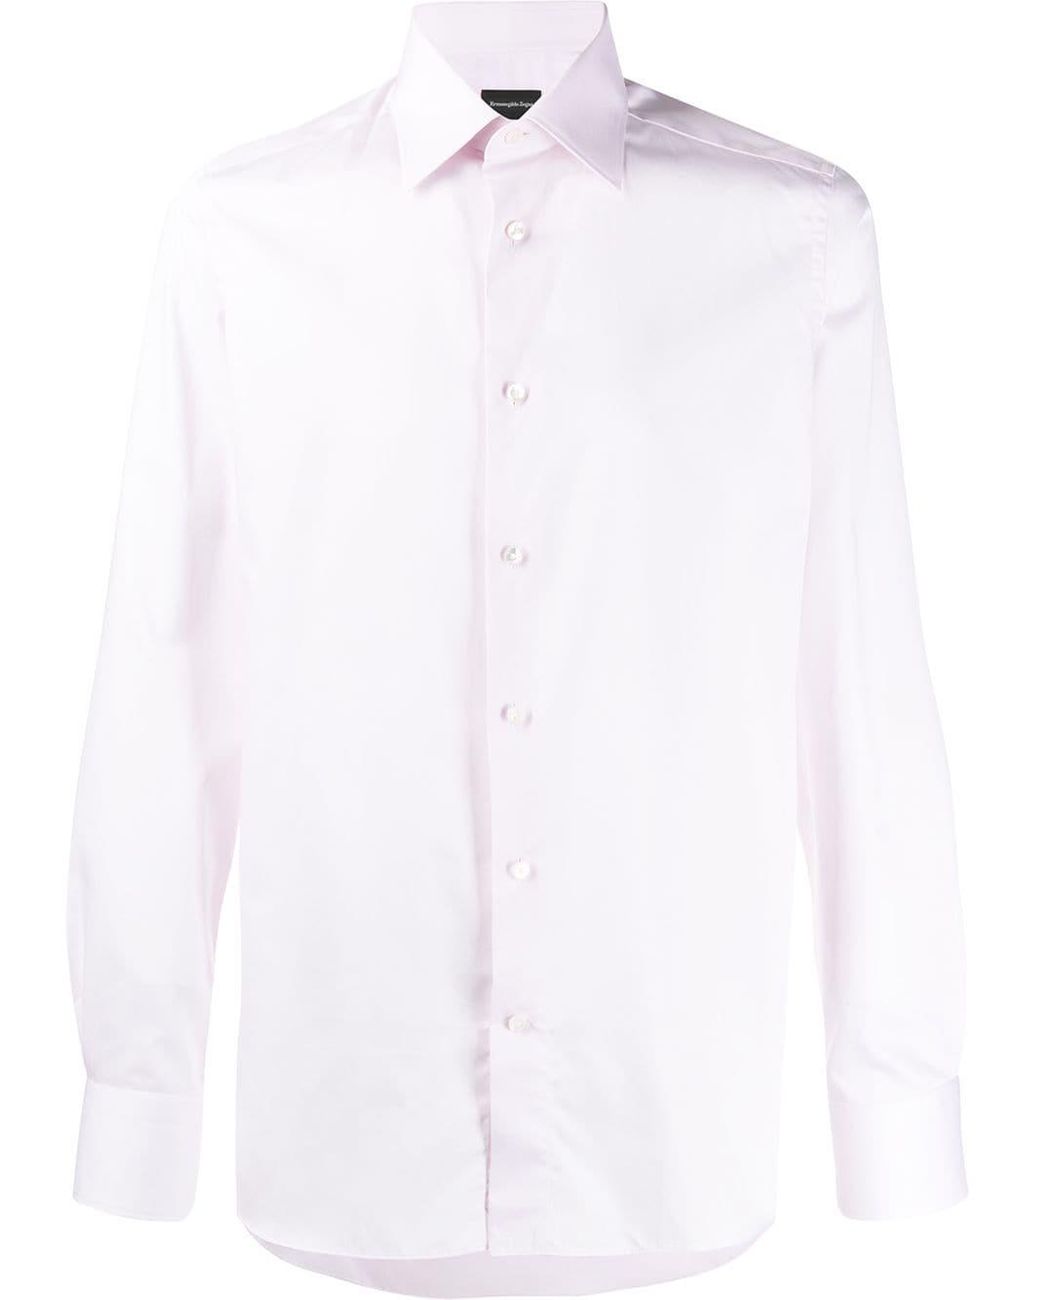 Ermenegildo Zegna Cotton Plain Button Shirt in Pink for Men - Lyst